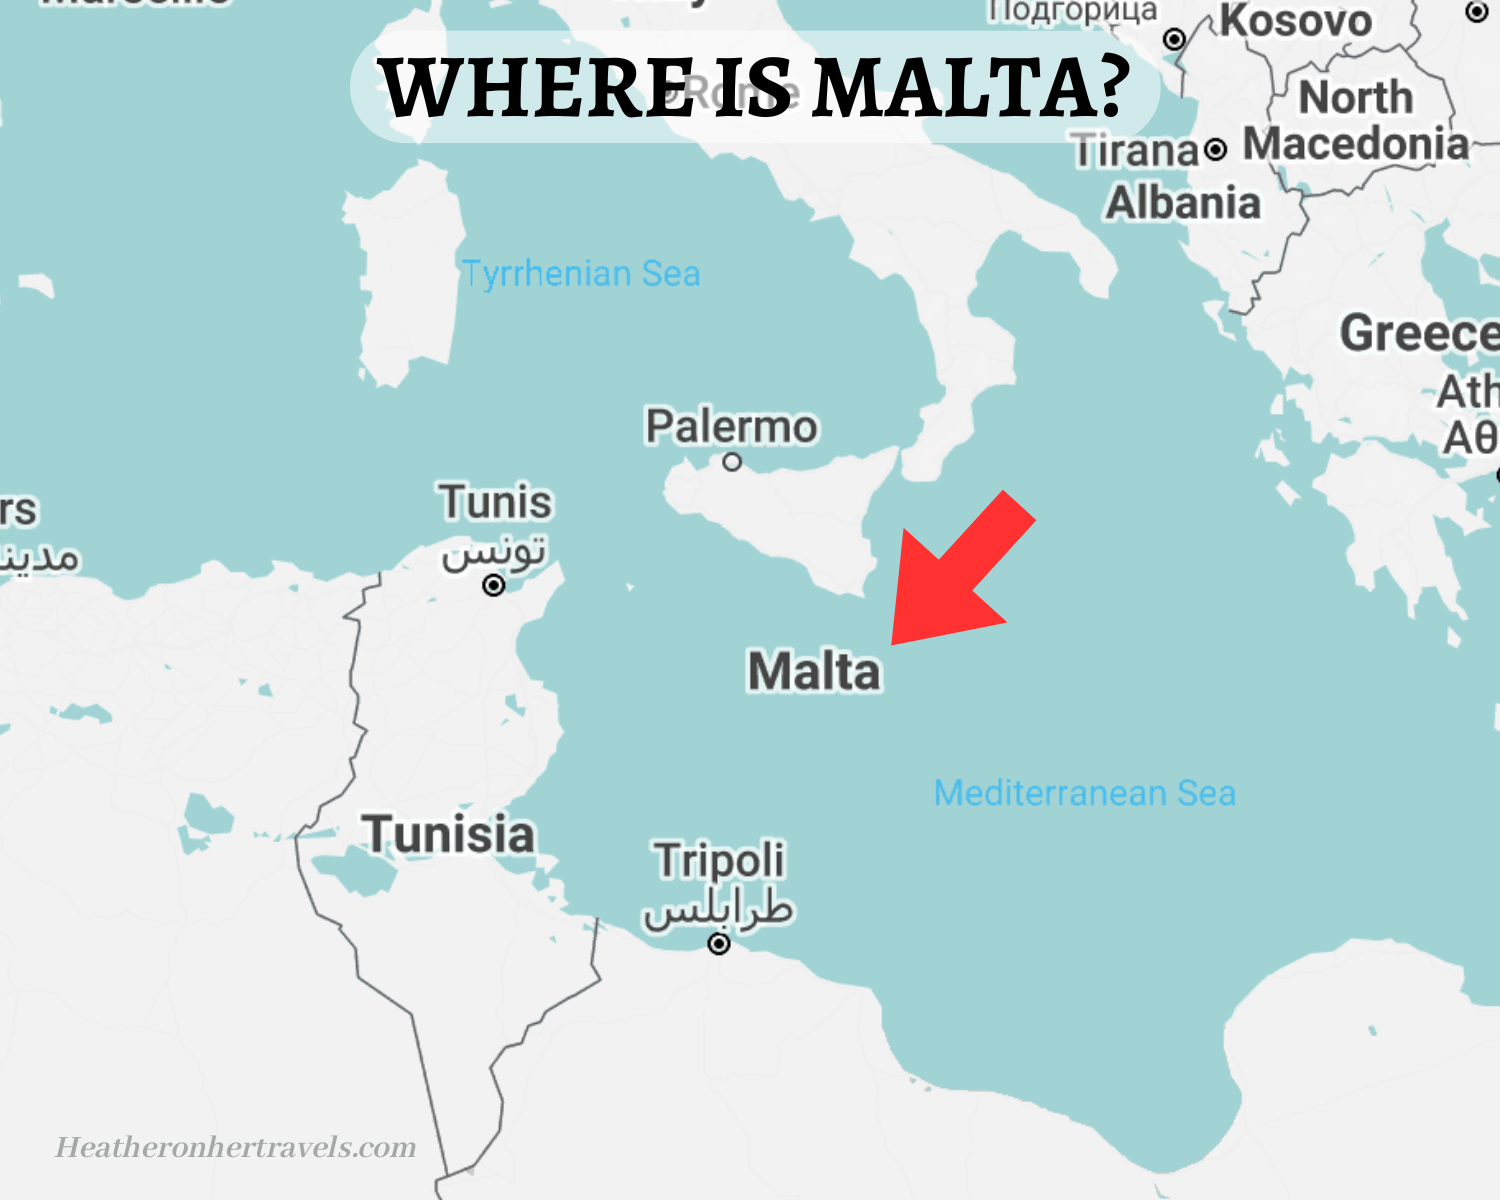 Where is Malta? Map by Heatheronhertravels.com